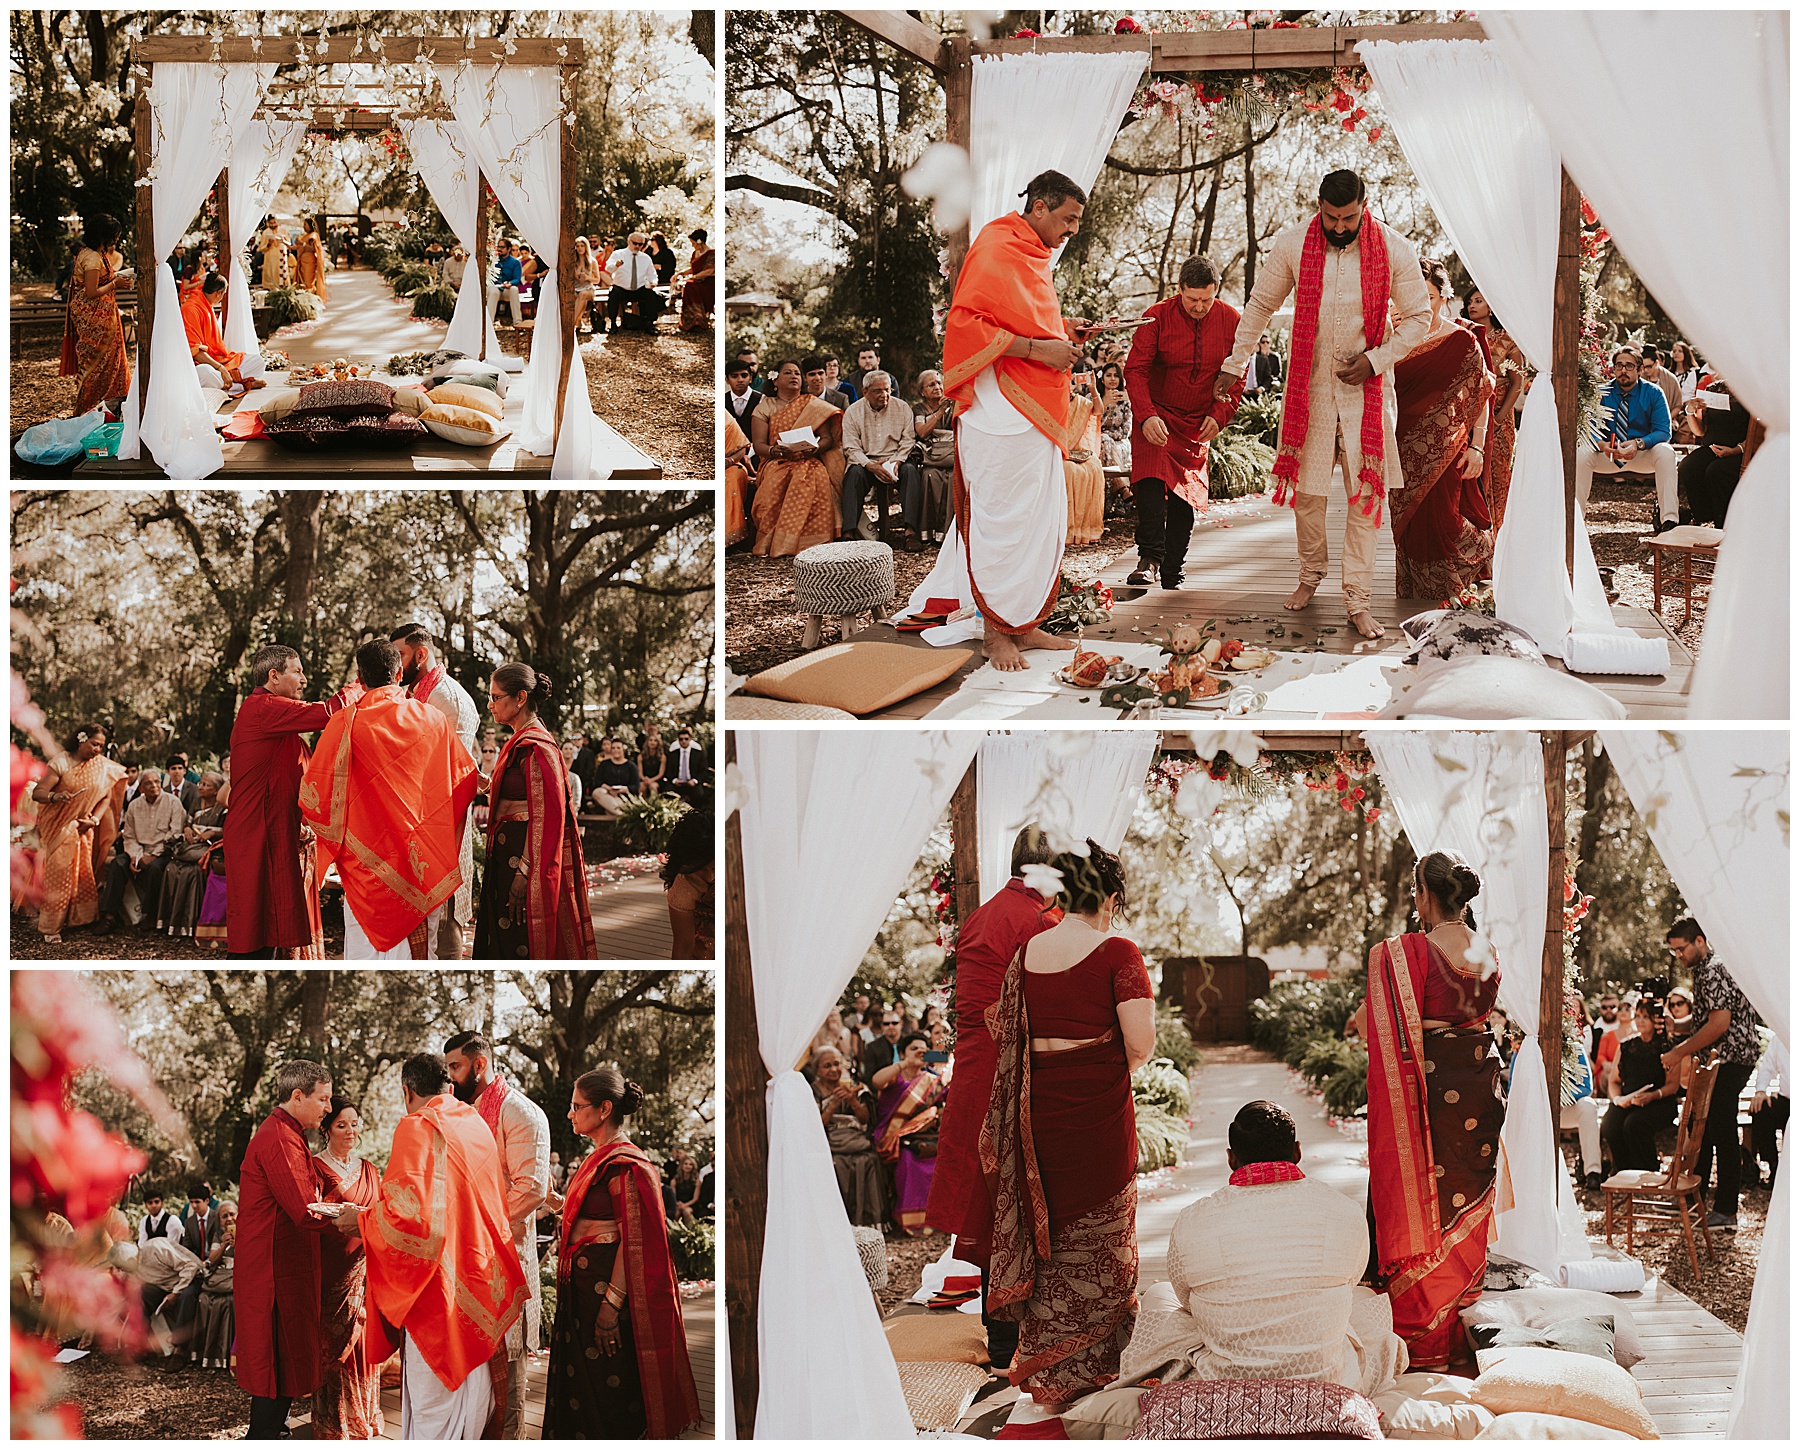 Sadie and Kiran’s religious Indian ceremony | Juju Photography - Florida, San Francisco & Destination wedding photographer 